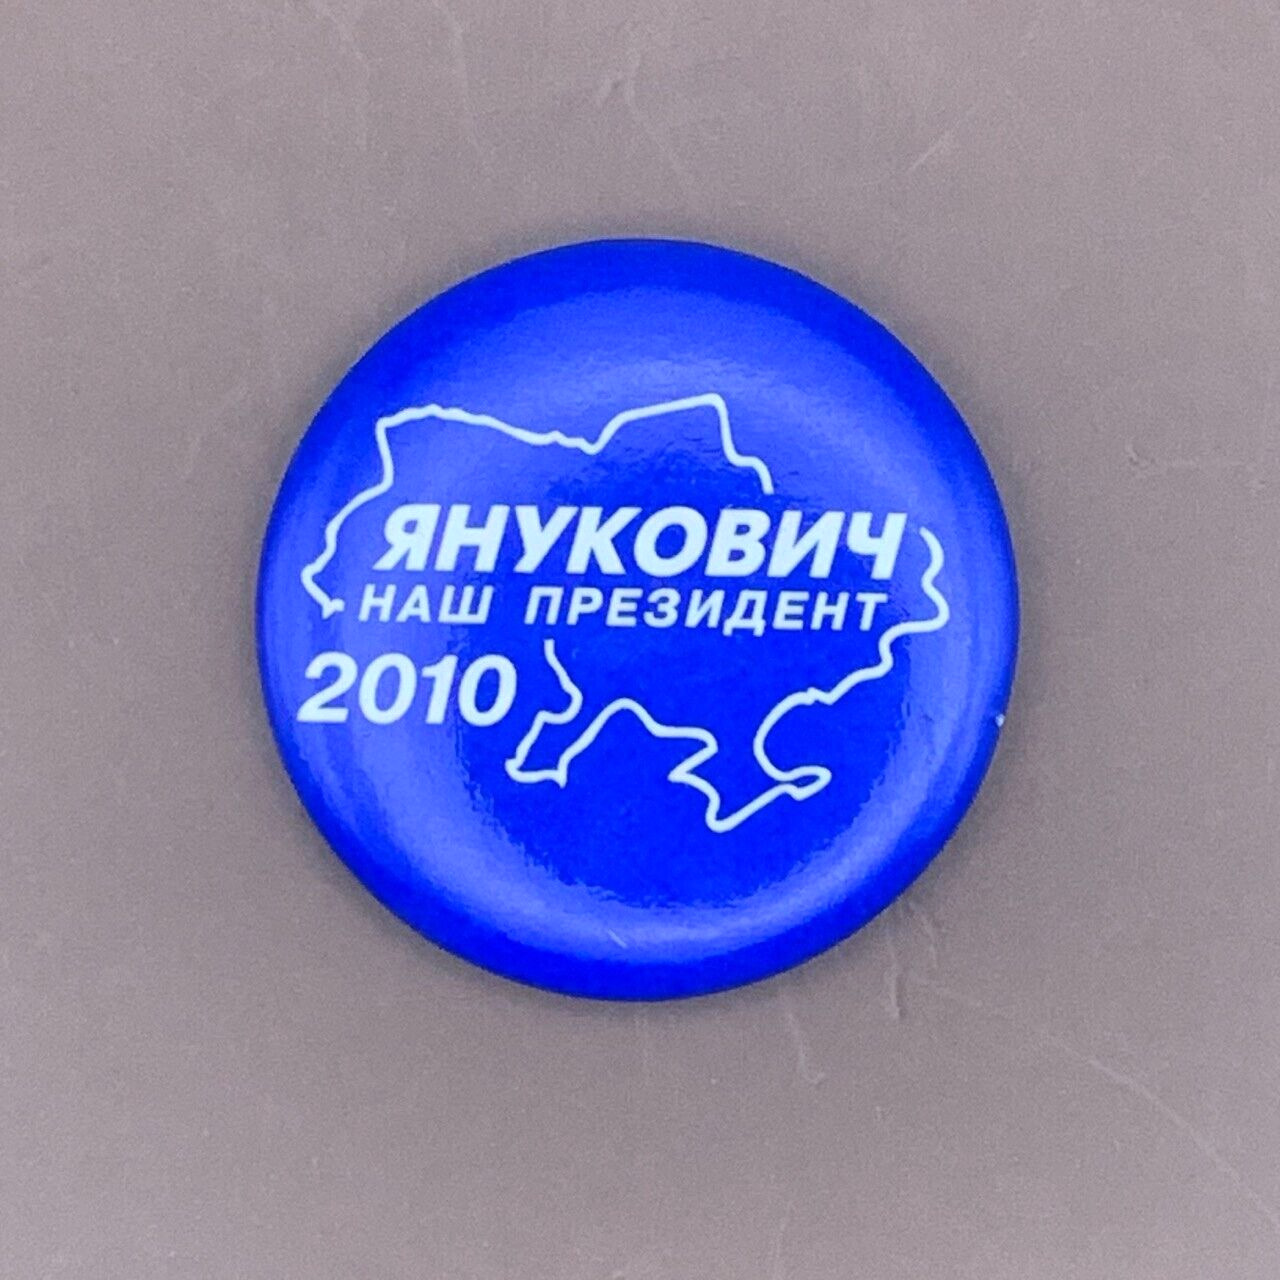 Propaganda Badge Ukrainian Presidential Election 2010 “Yanukovych Our President”